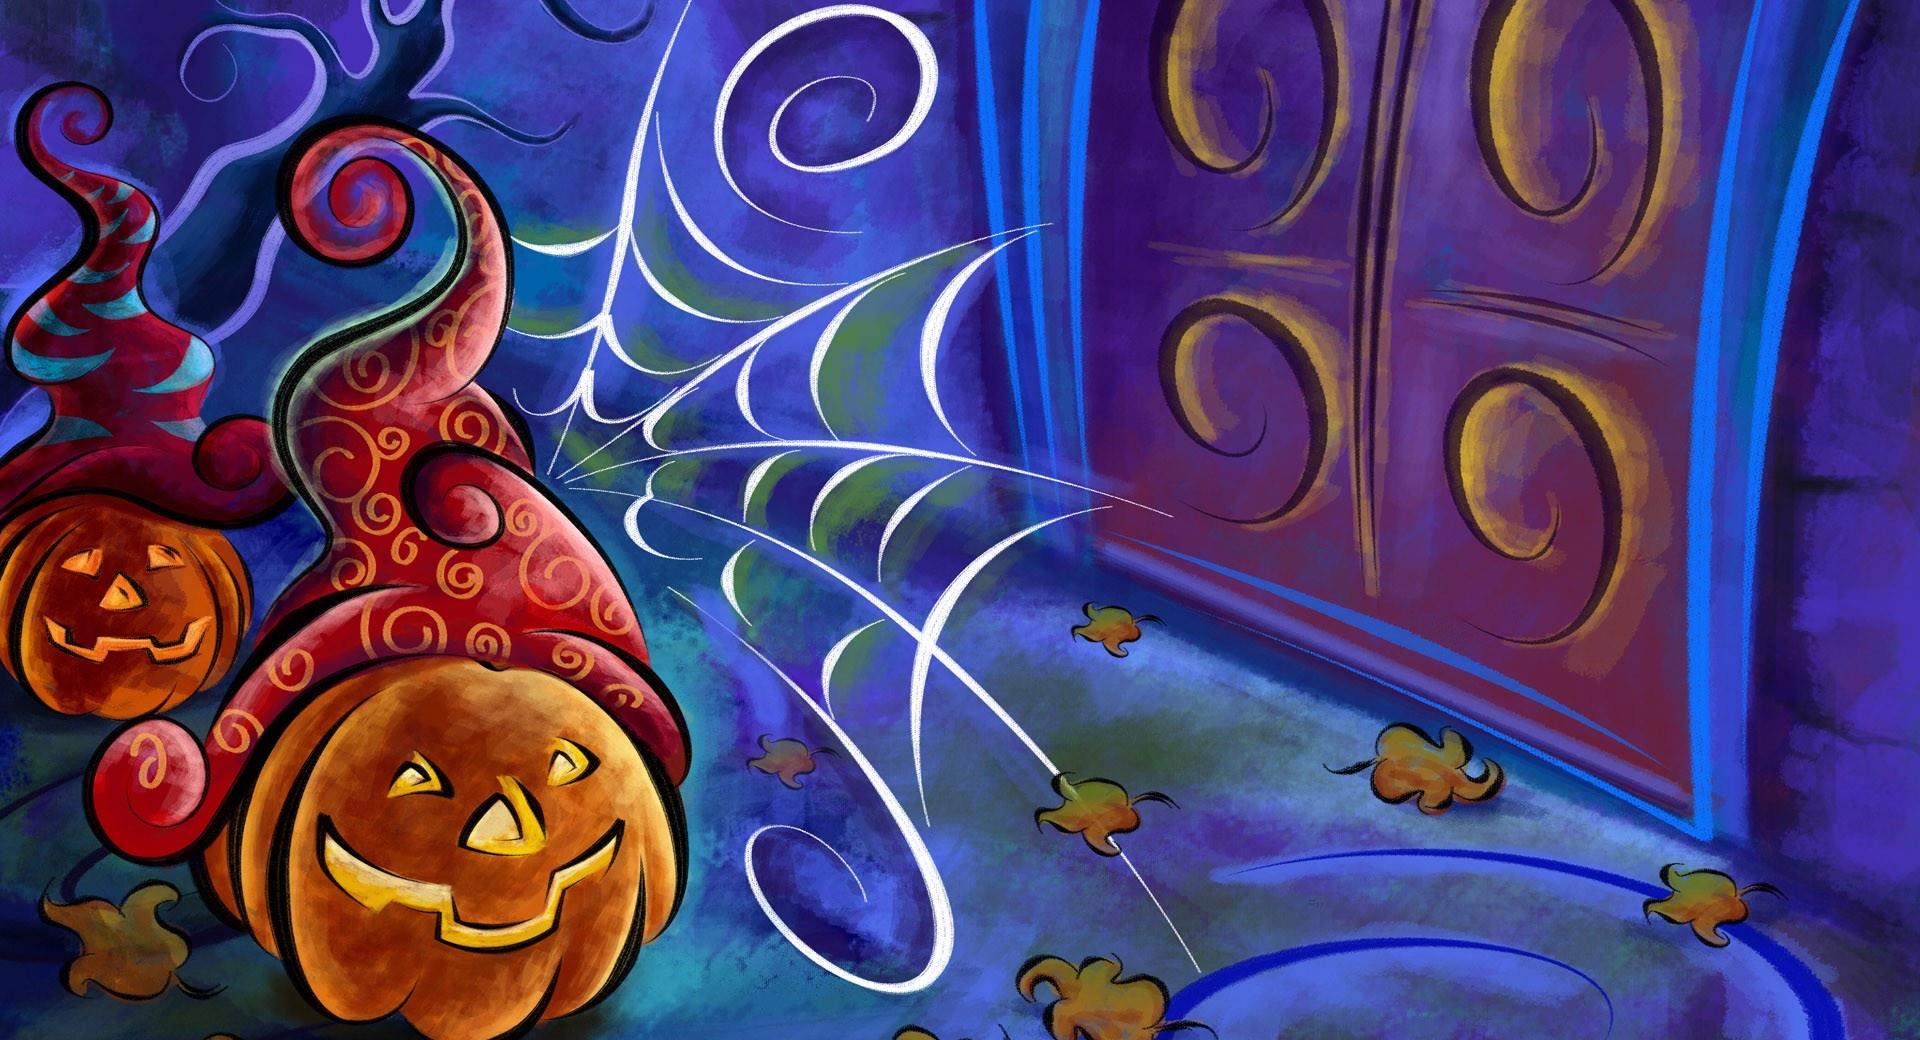 Halloween Pumpkin High Quality Screen at 1024 x 1024 iPad size wallpapers HD quality